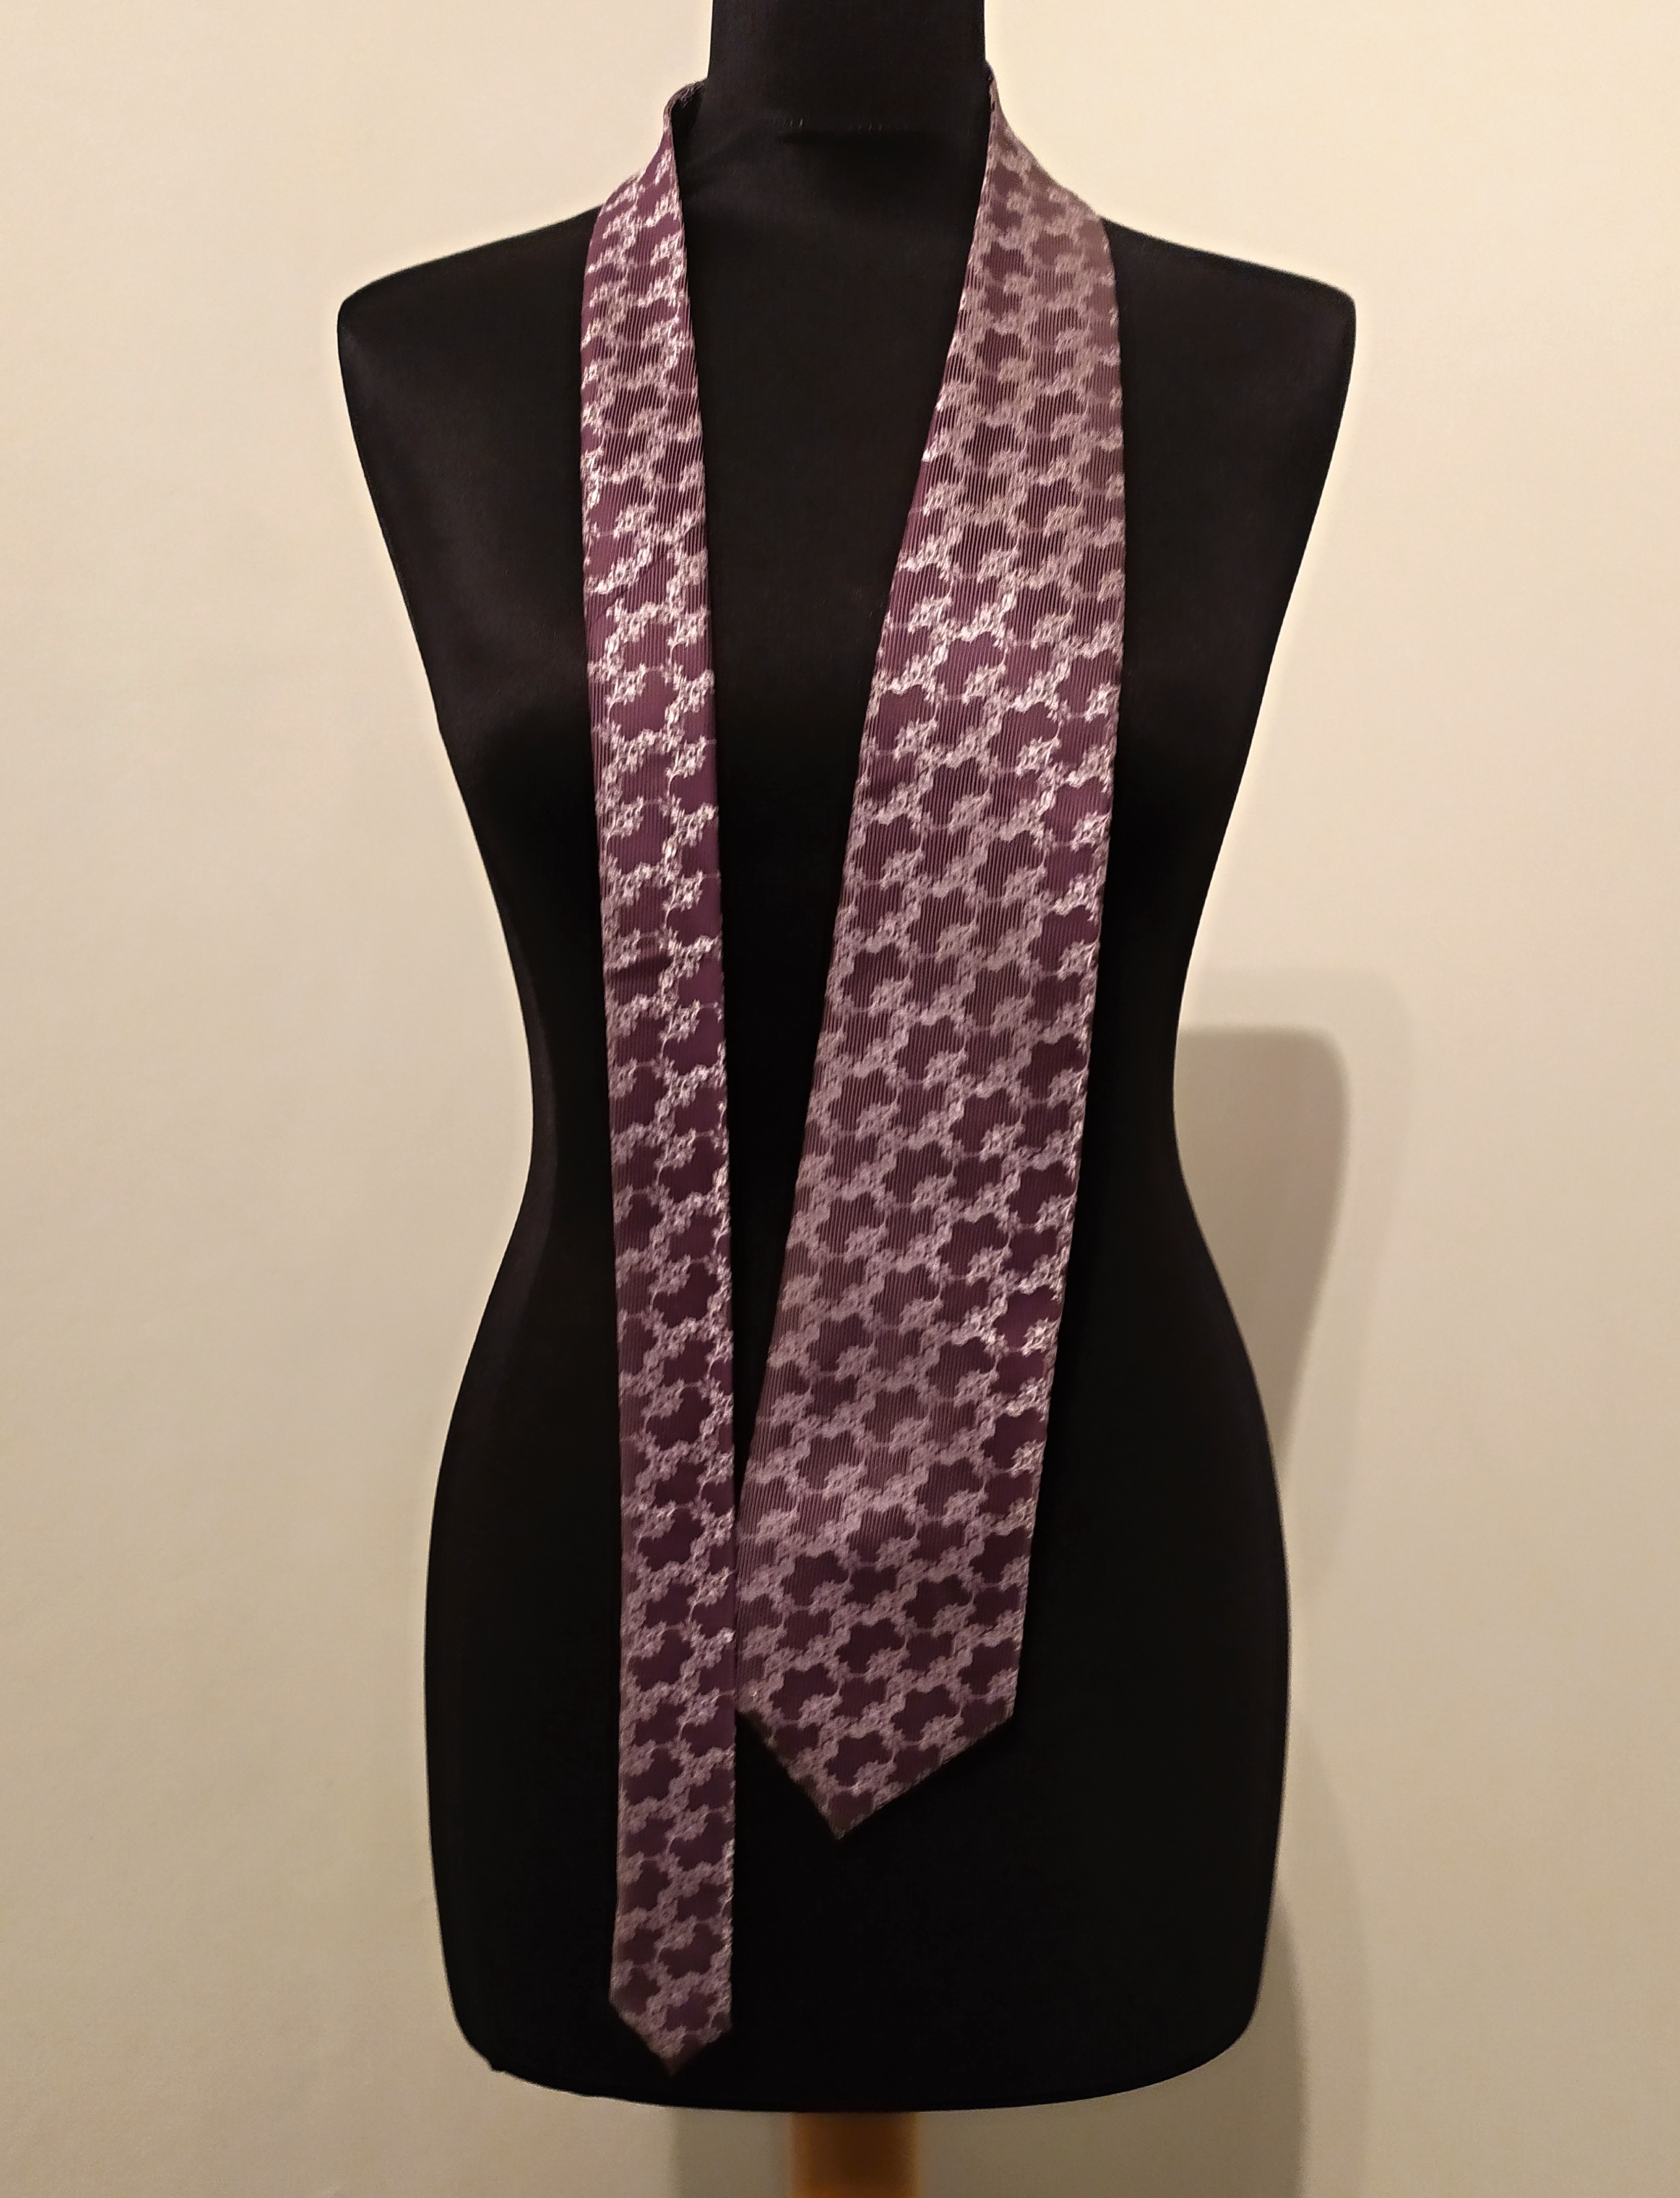 Pánská kravata tm. fialová